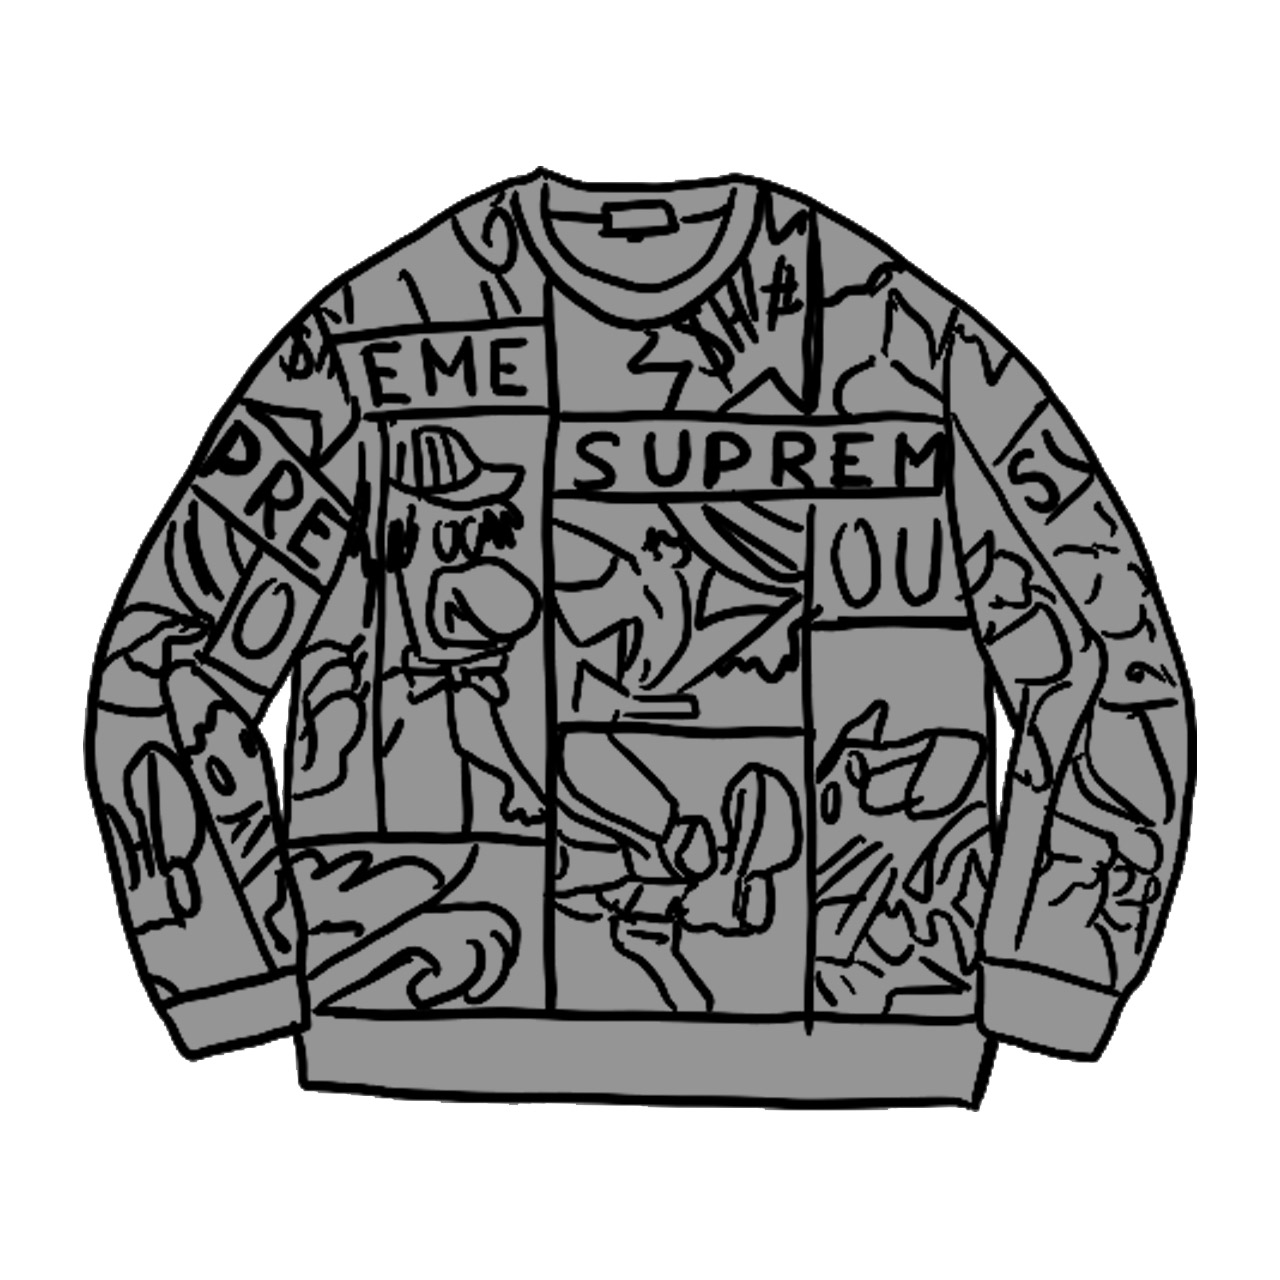 Supreme Cartoon Sweater Black